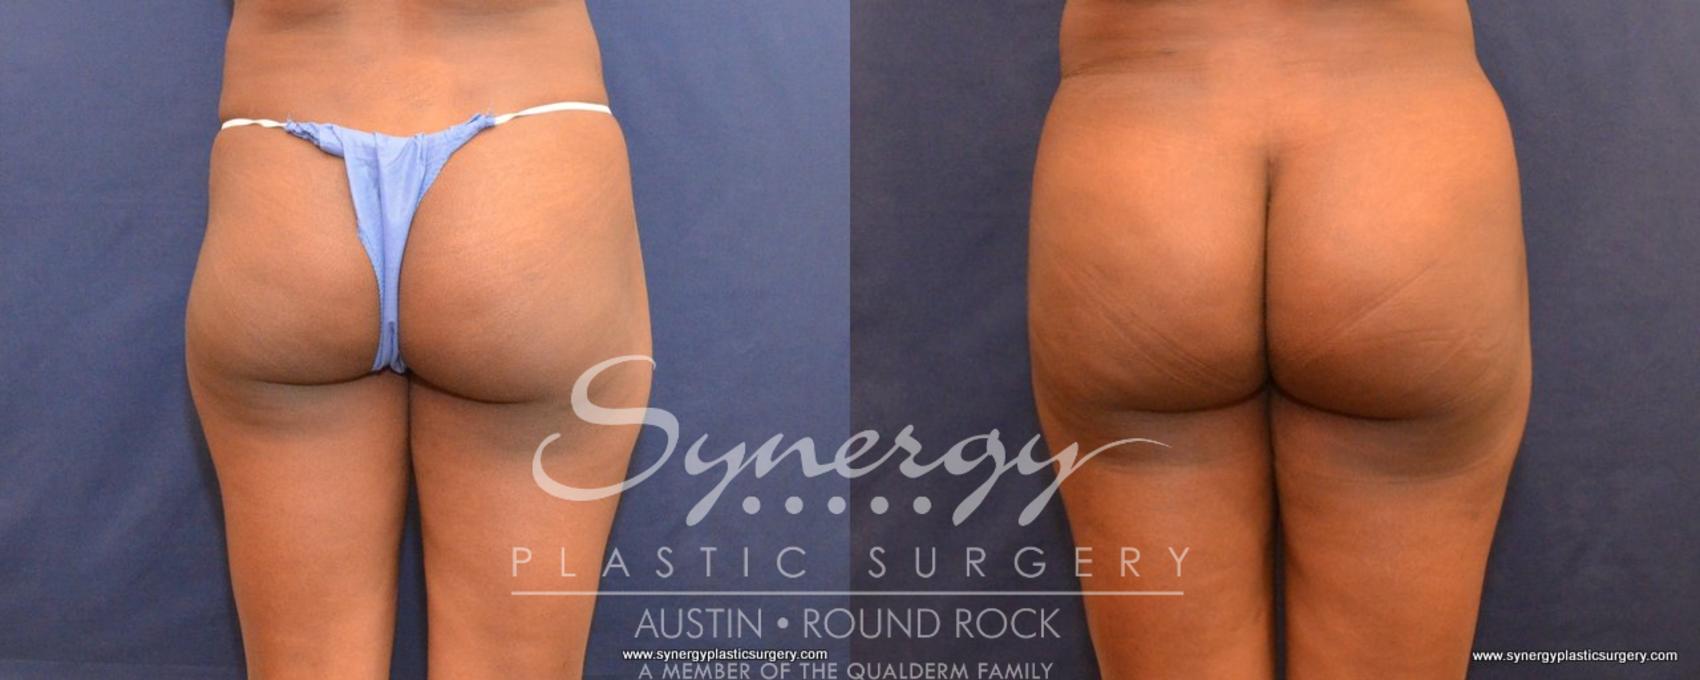 Before & After Buttock Augmentation/Brazilian Butt Lift Case 497 View #1 View in Austin, TX